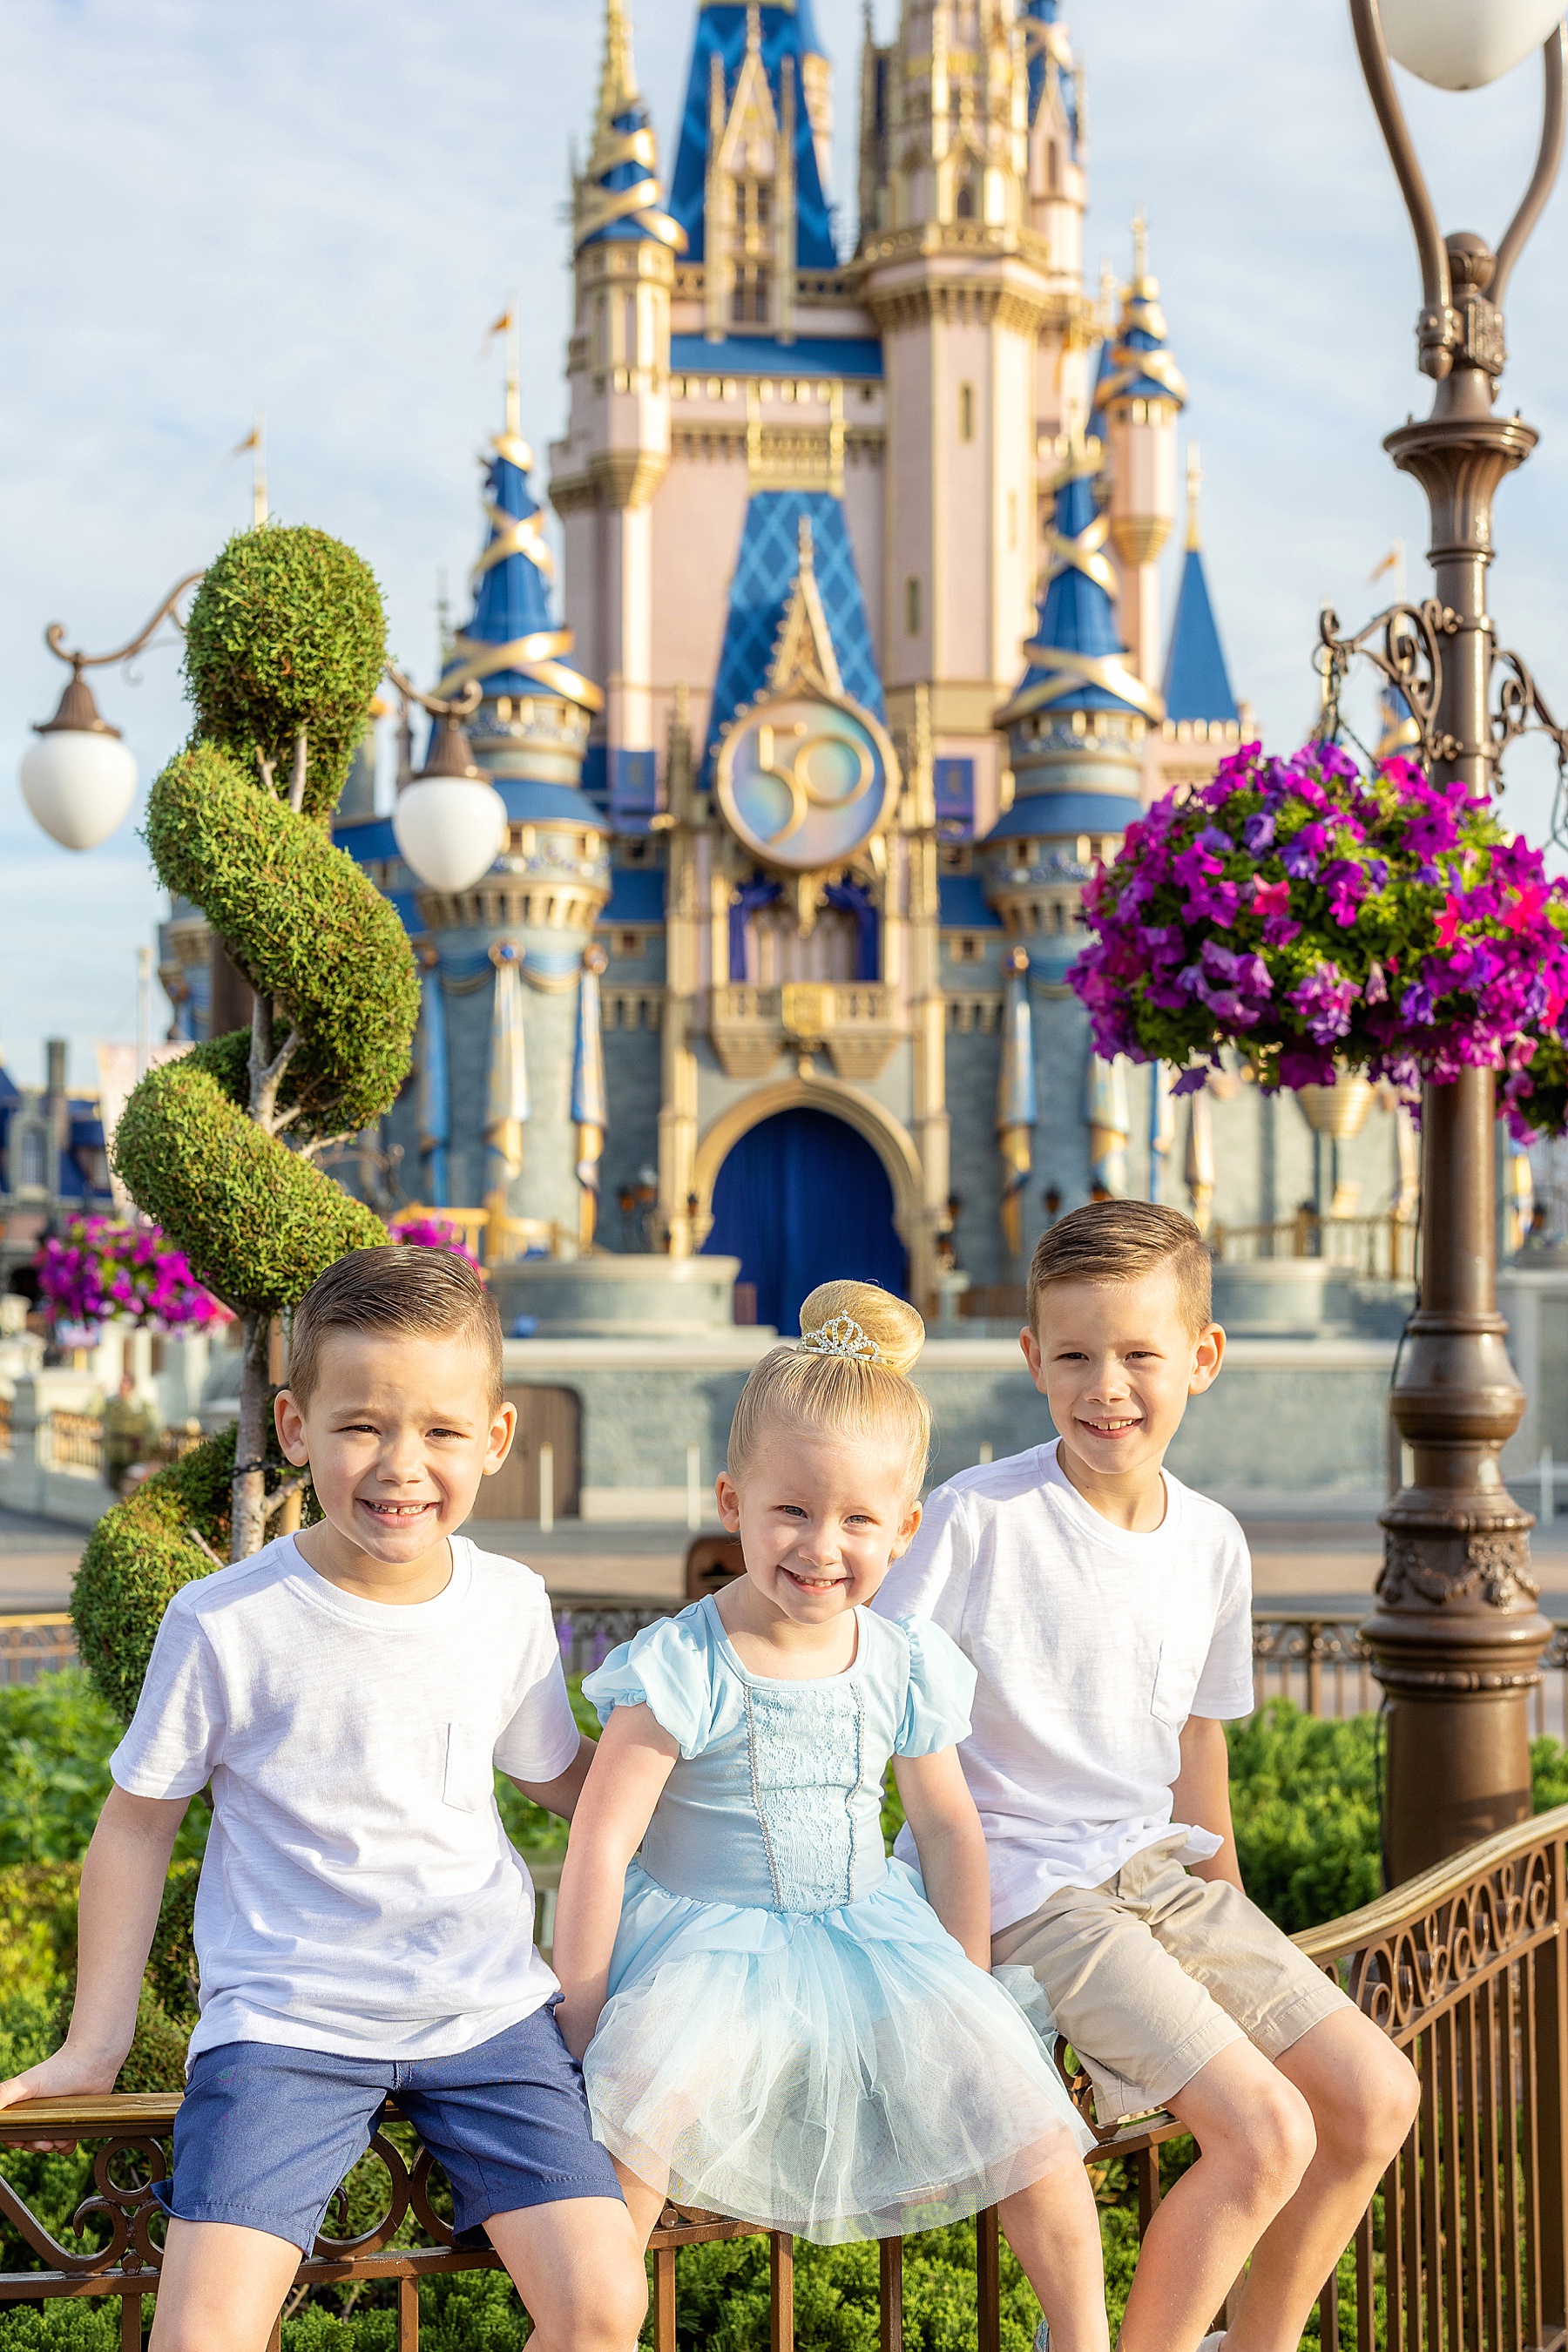 siblings sitting on fence in front of Magic Kingdom Castle Walt Disney World